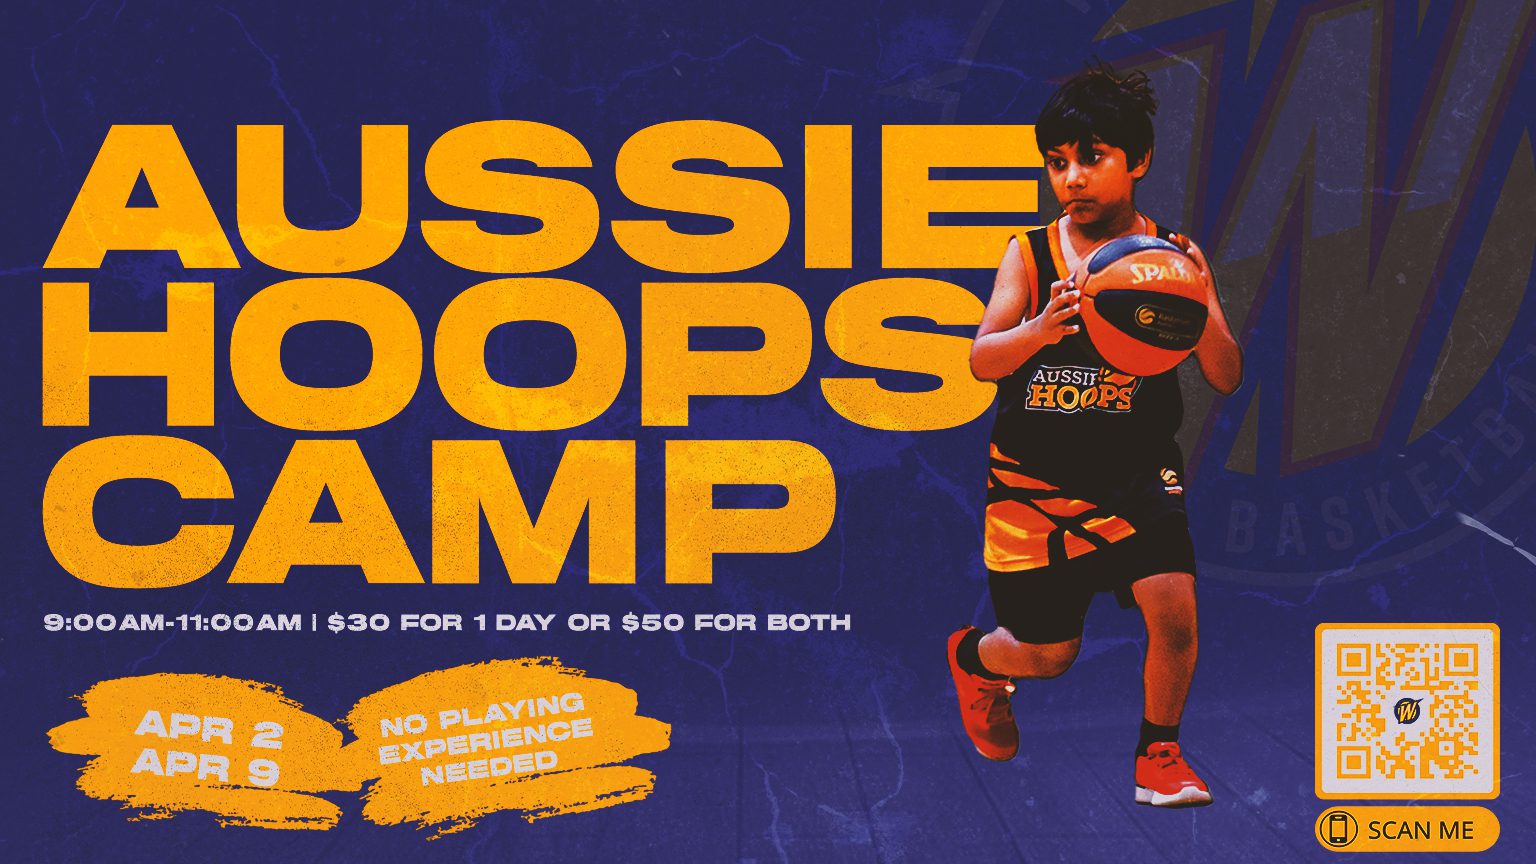 Aussie Hoops Camp